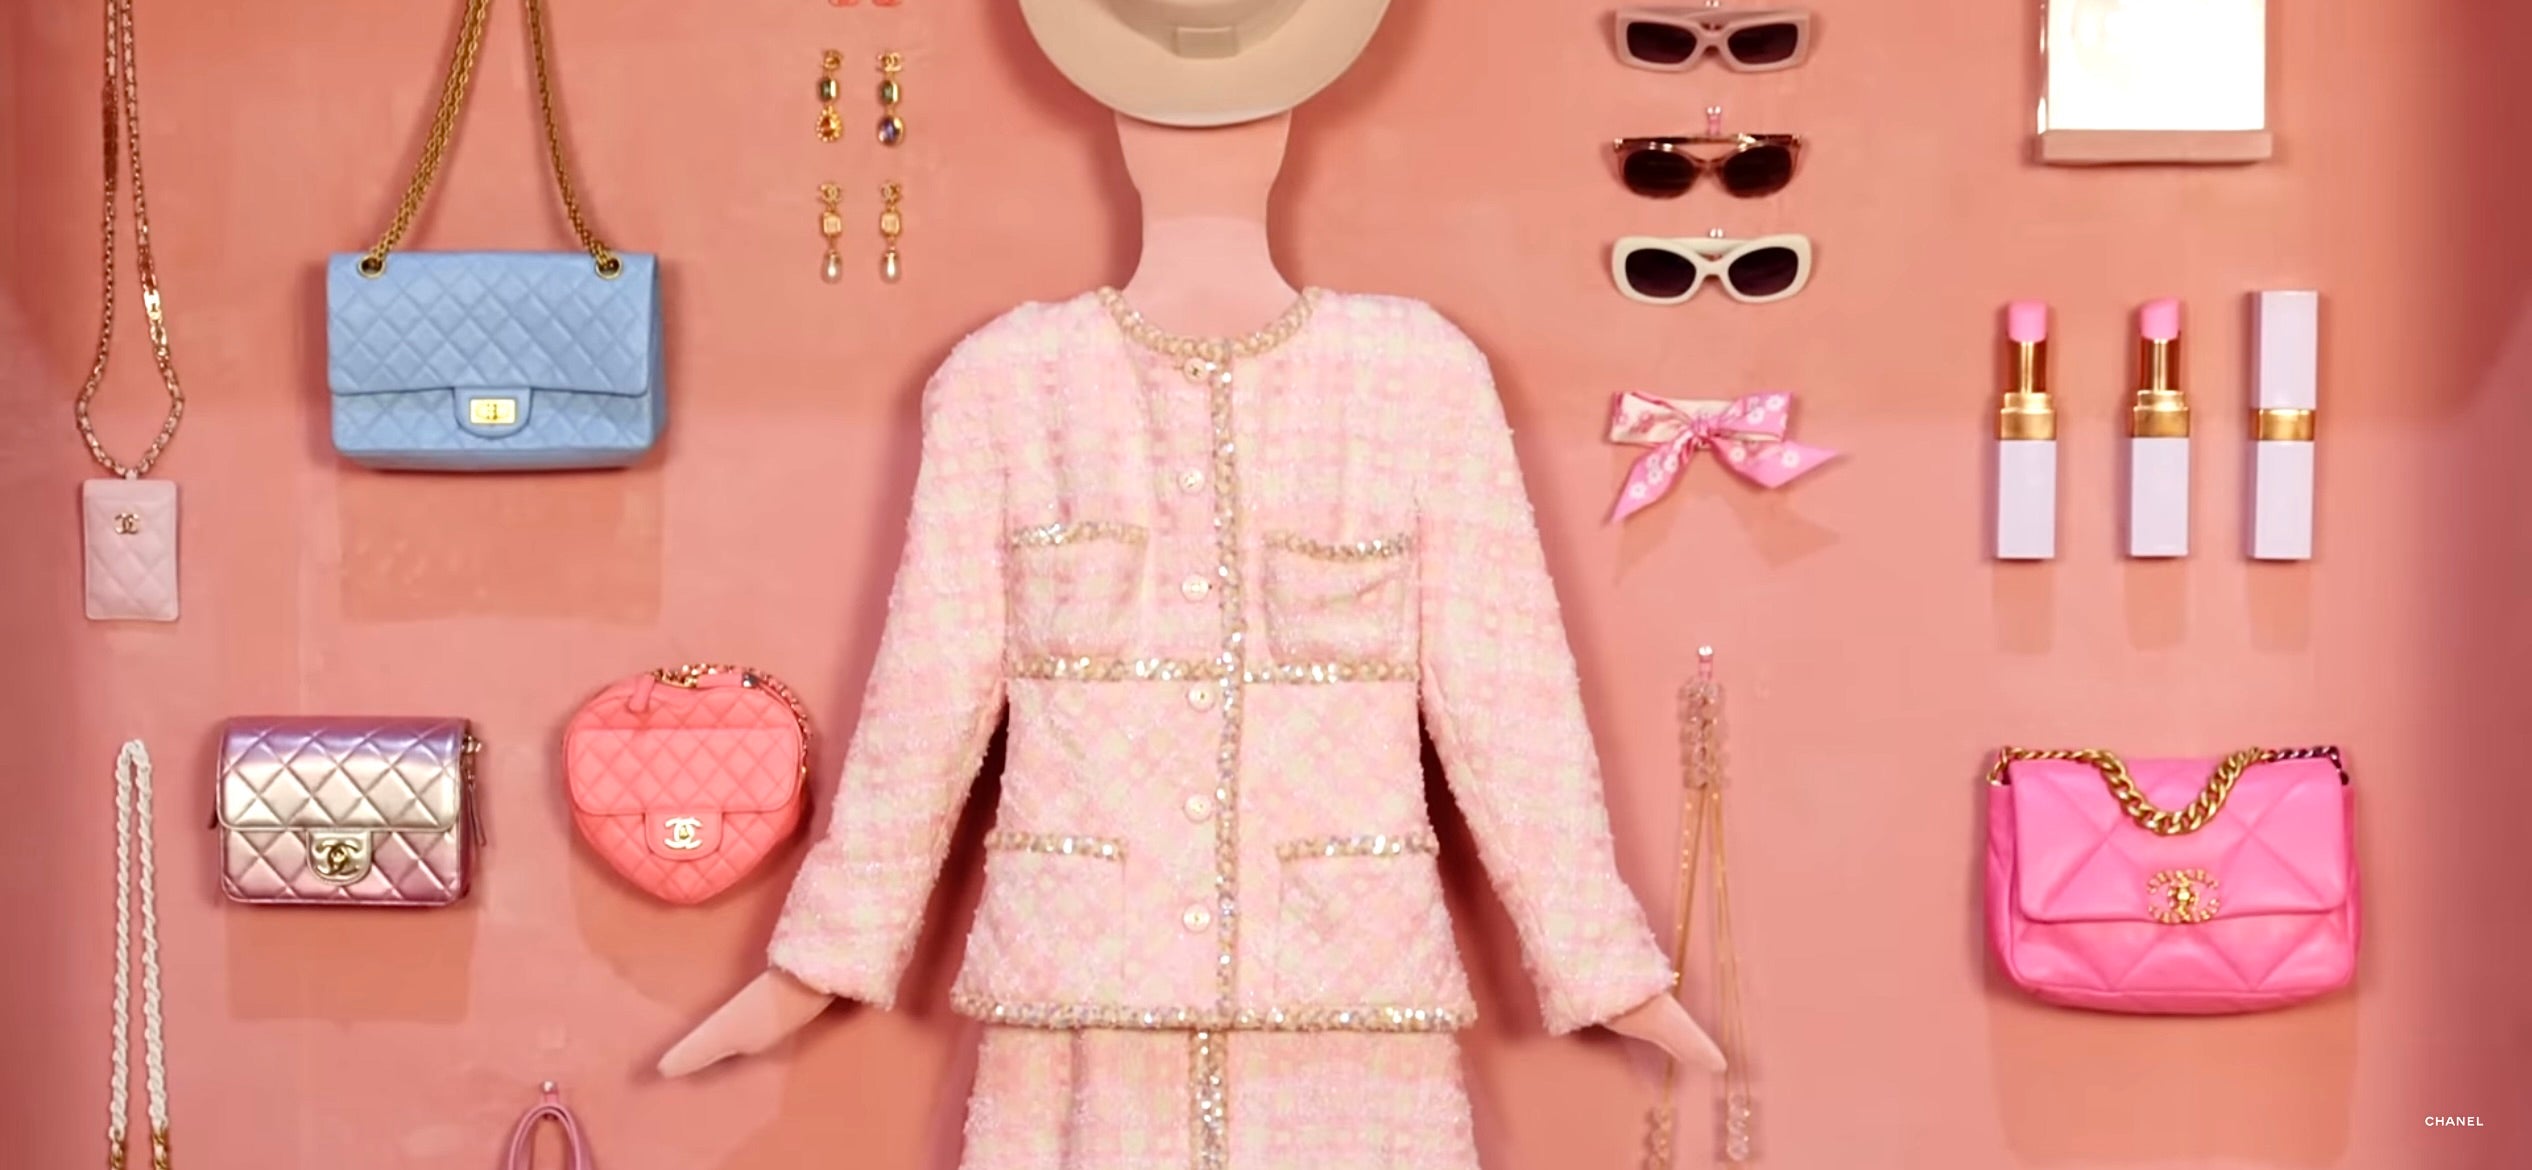 Barbie Movie Chanel fashion items